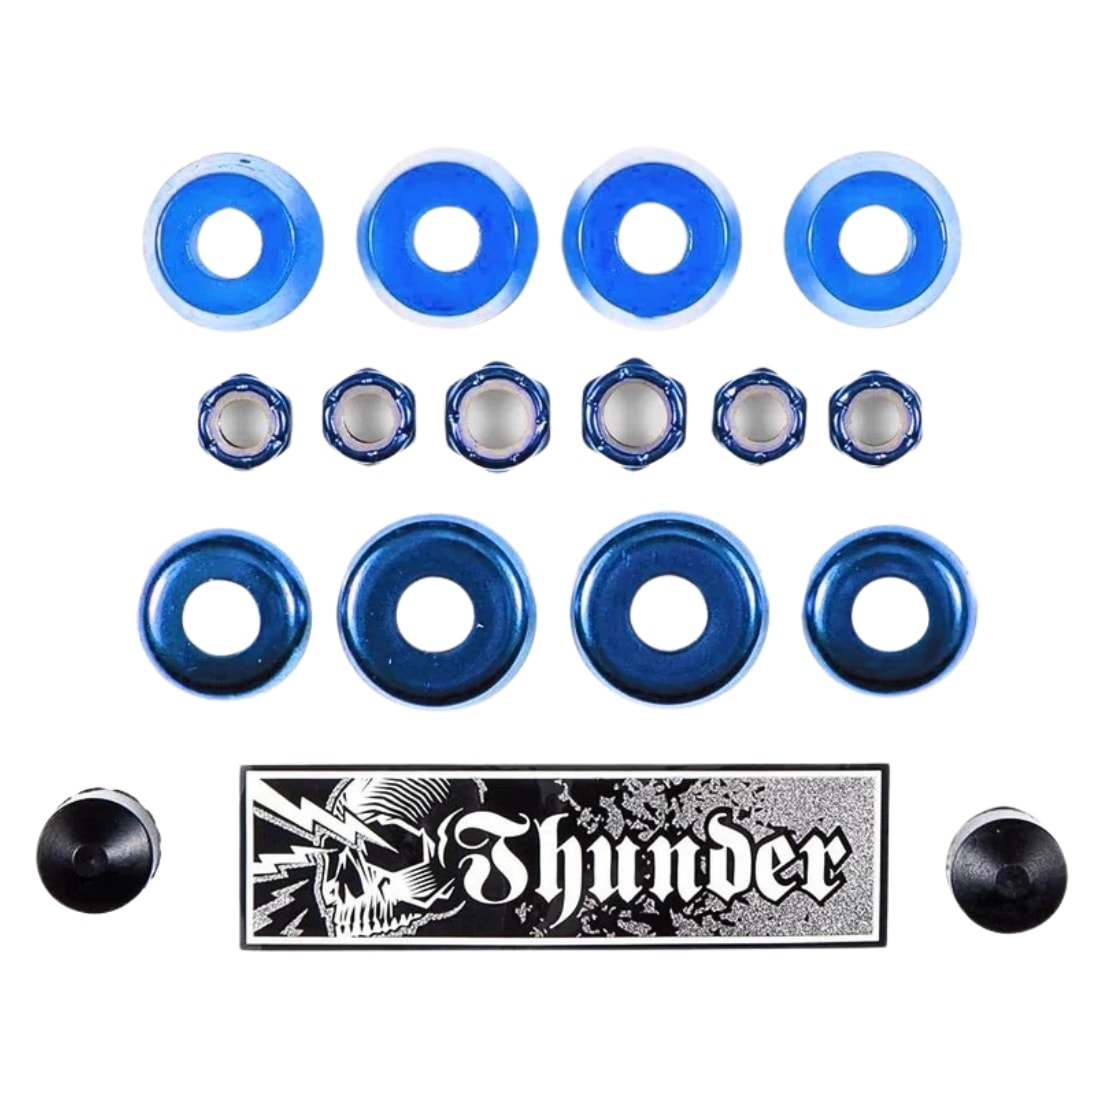 Thunder 95 Duro Rebuild Kit (Bushings/Nuts/Pivot Cup/Washers) - Blue - Skateboard Bushings by Thunder